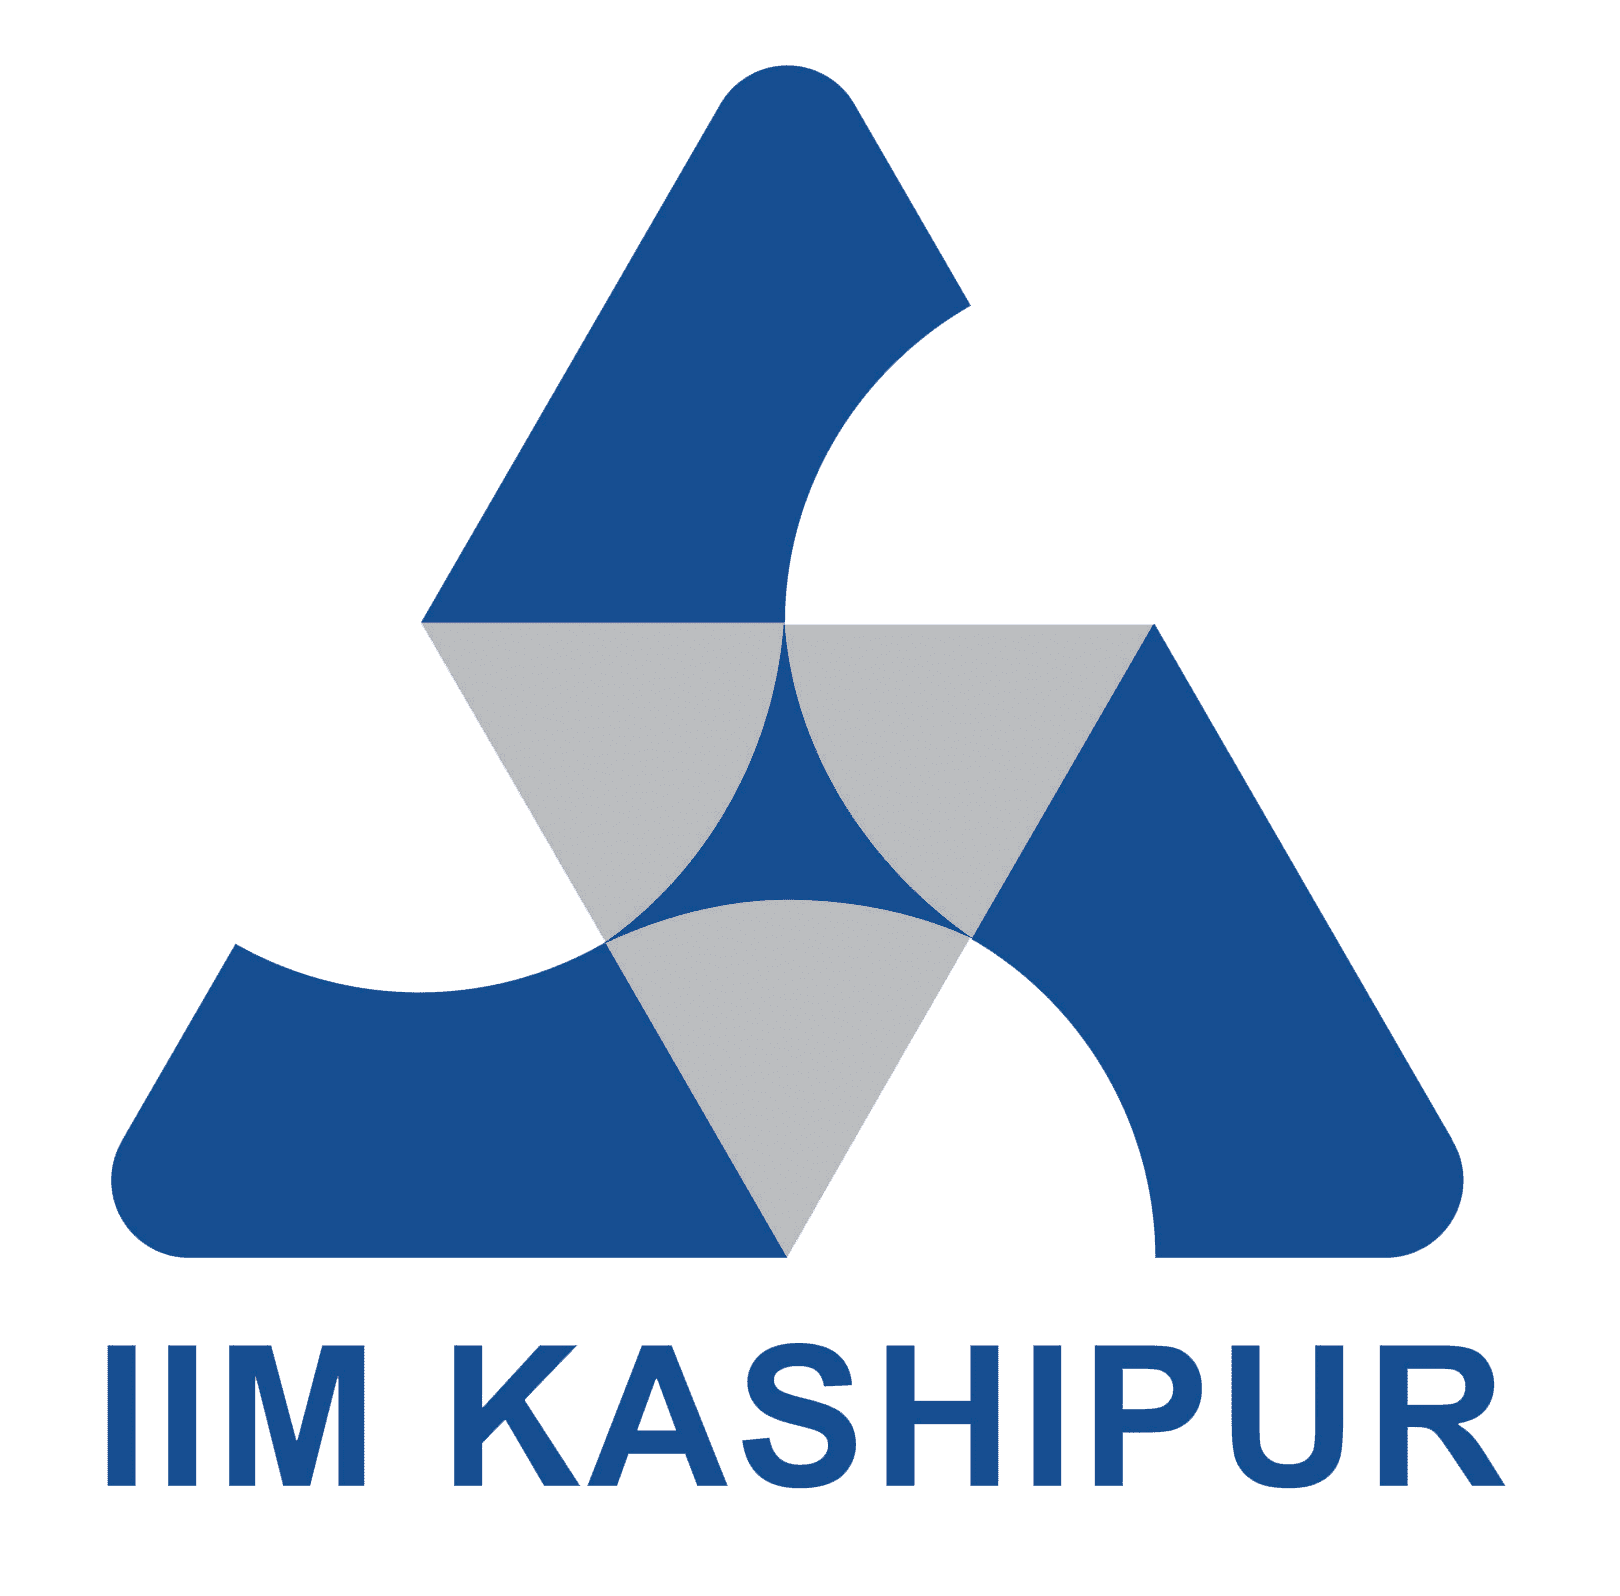 Indian Institute of Management, Kashipur